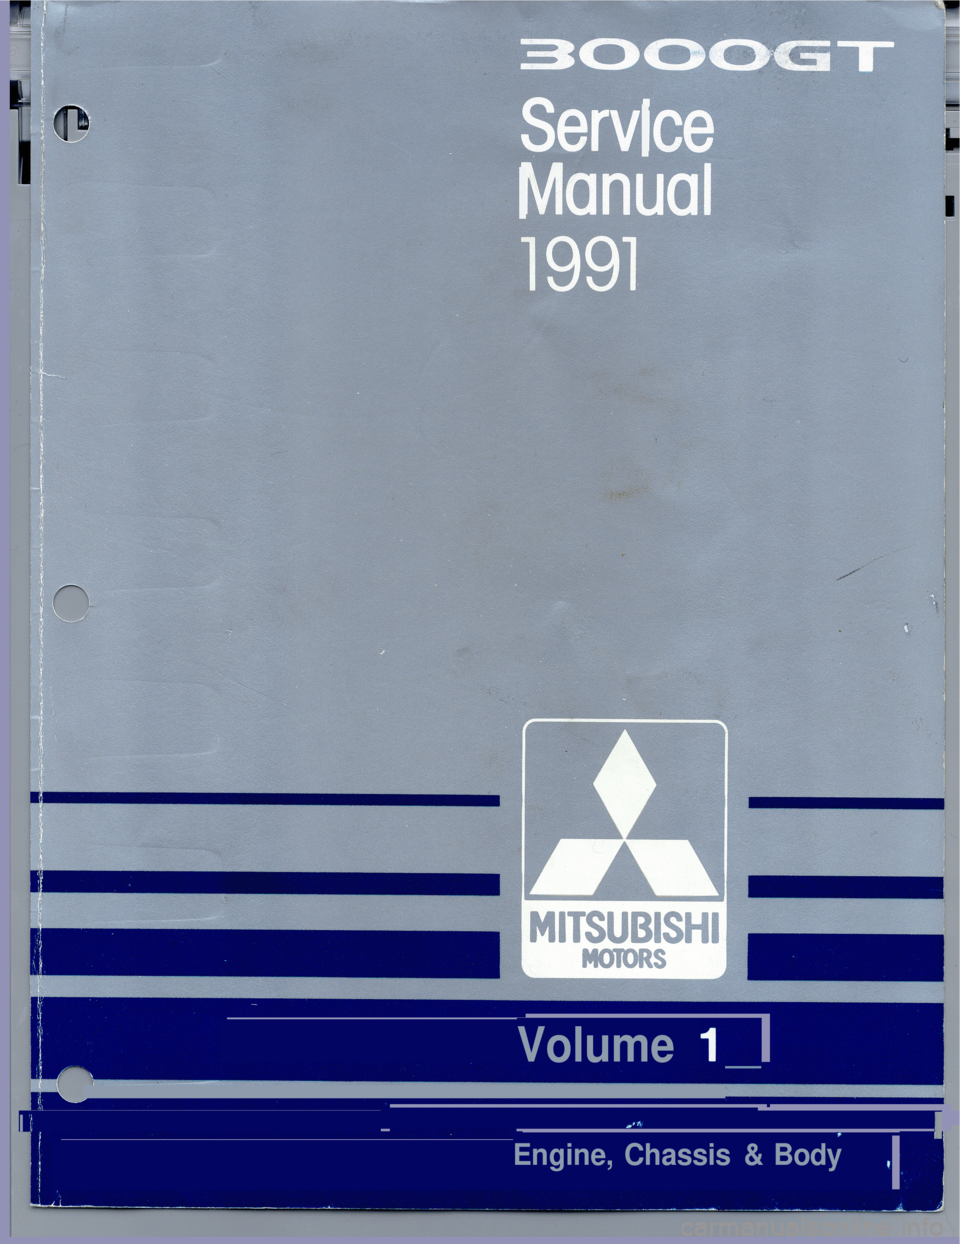 MITSUBISHI 3000GT 1991  Service Manual Volume lm
I ‘k,‘6III
Engine, Chassis & Bodyf 